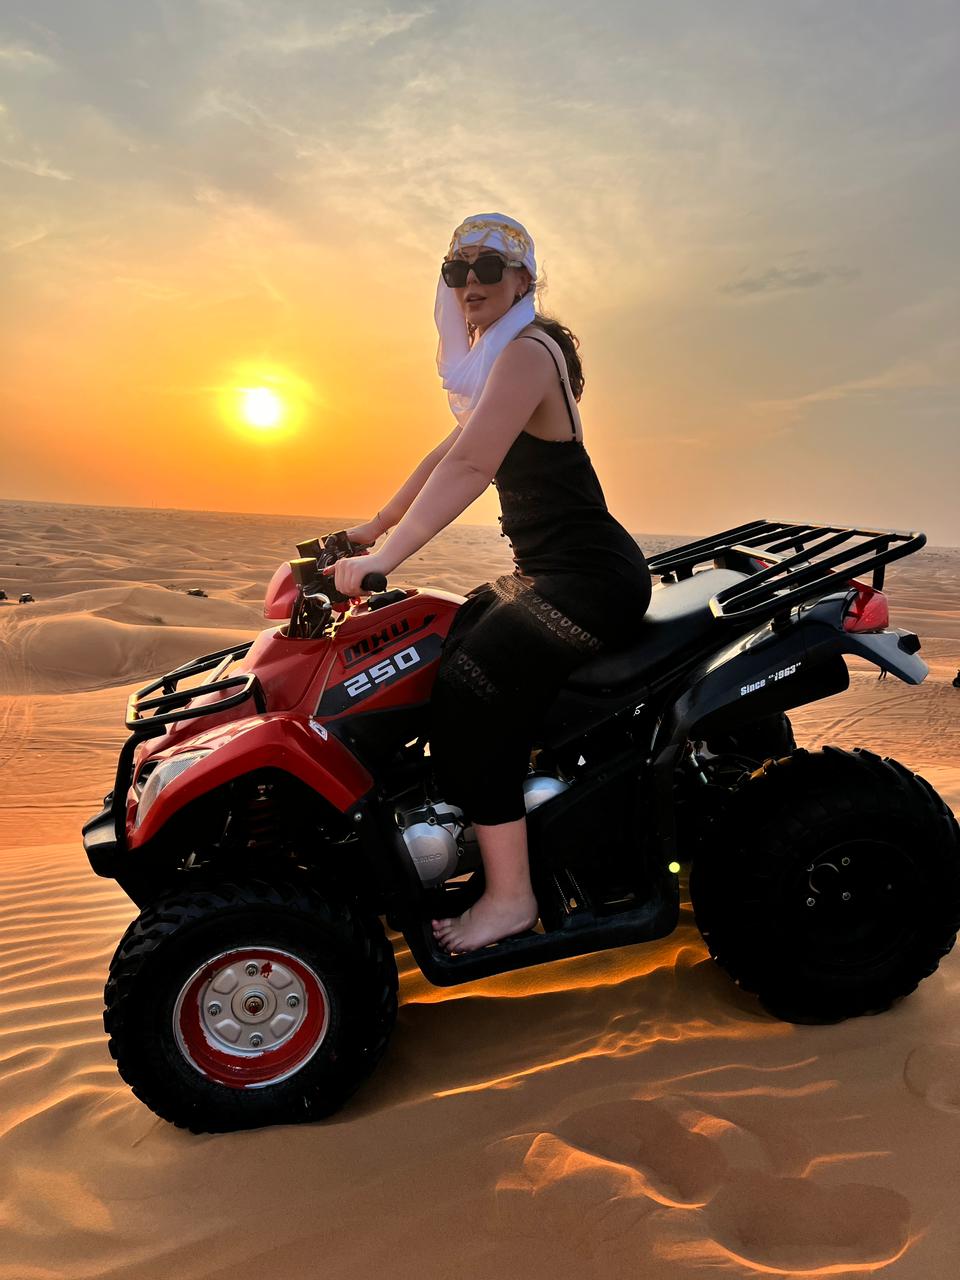 morning desert safari with quad bike ride in dubai